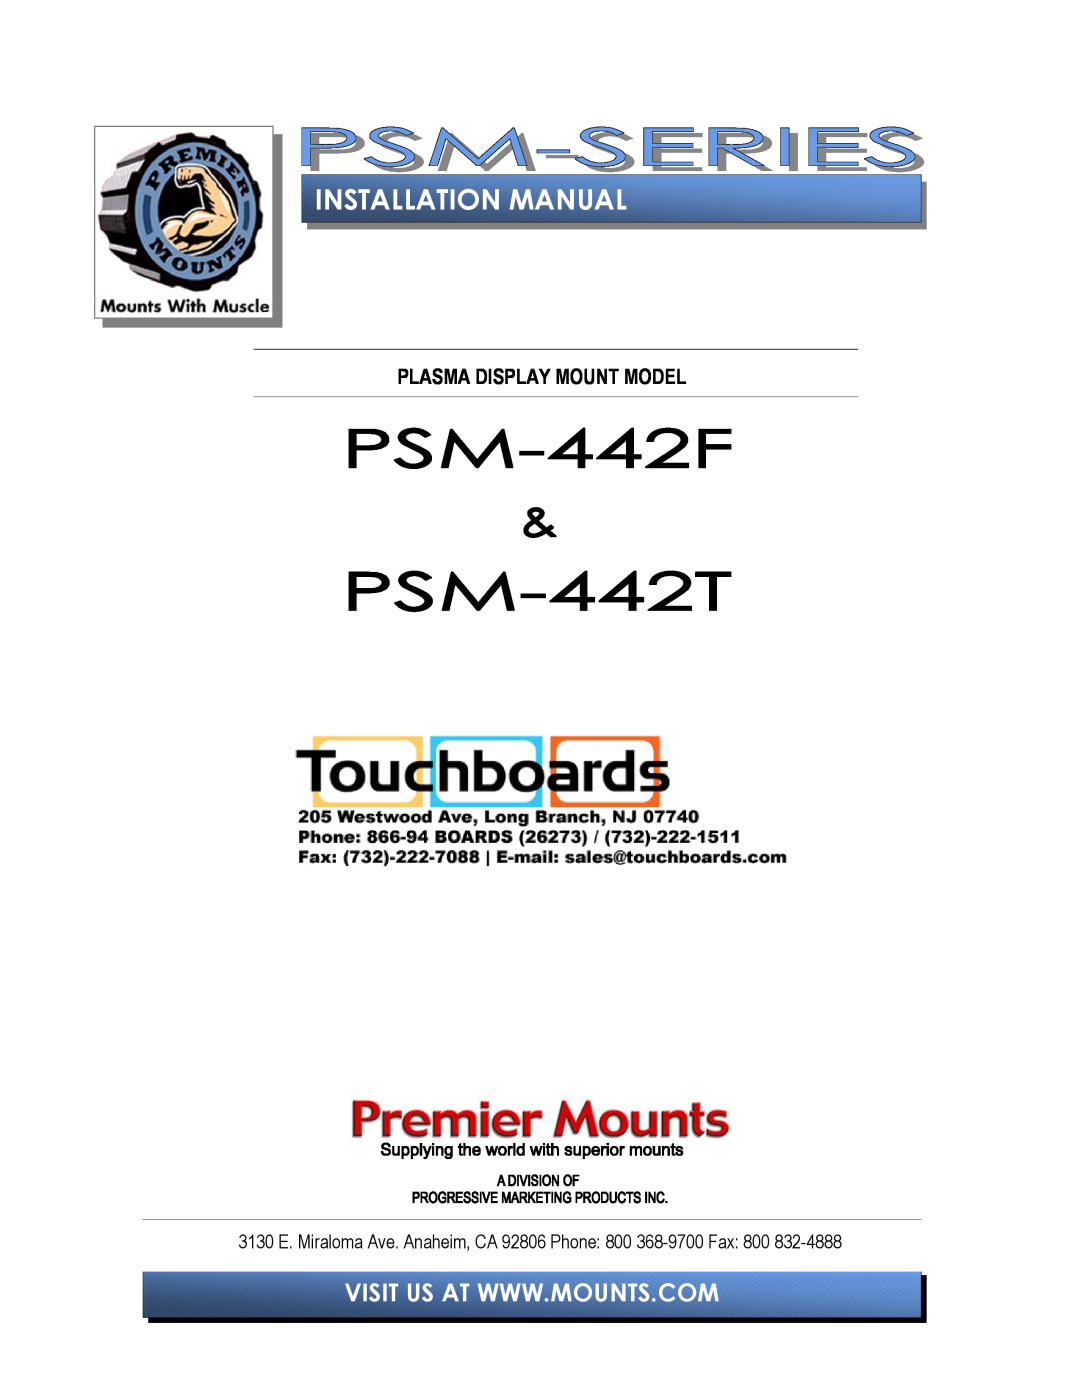 Premier Mounts PSM-442F, PSM-442T installation manual Plasma Display Mount Model, Installation Manual 